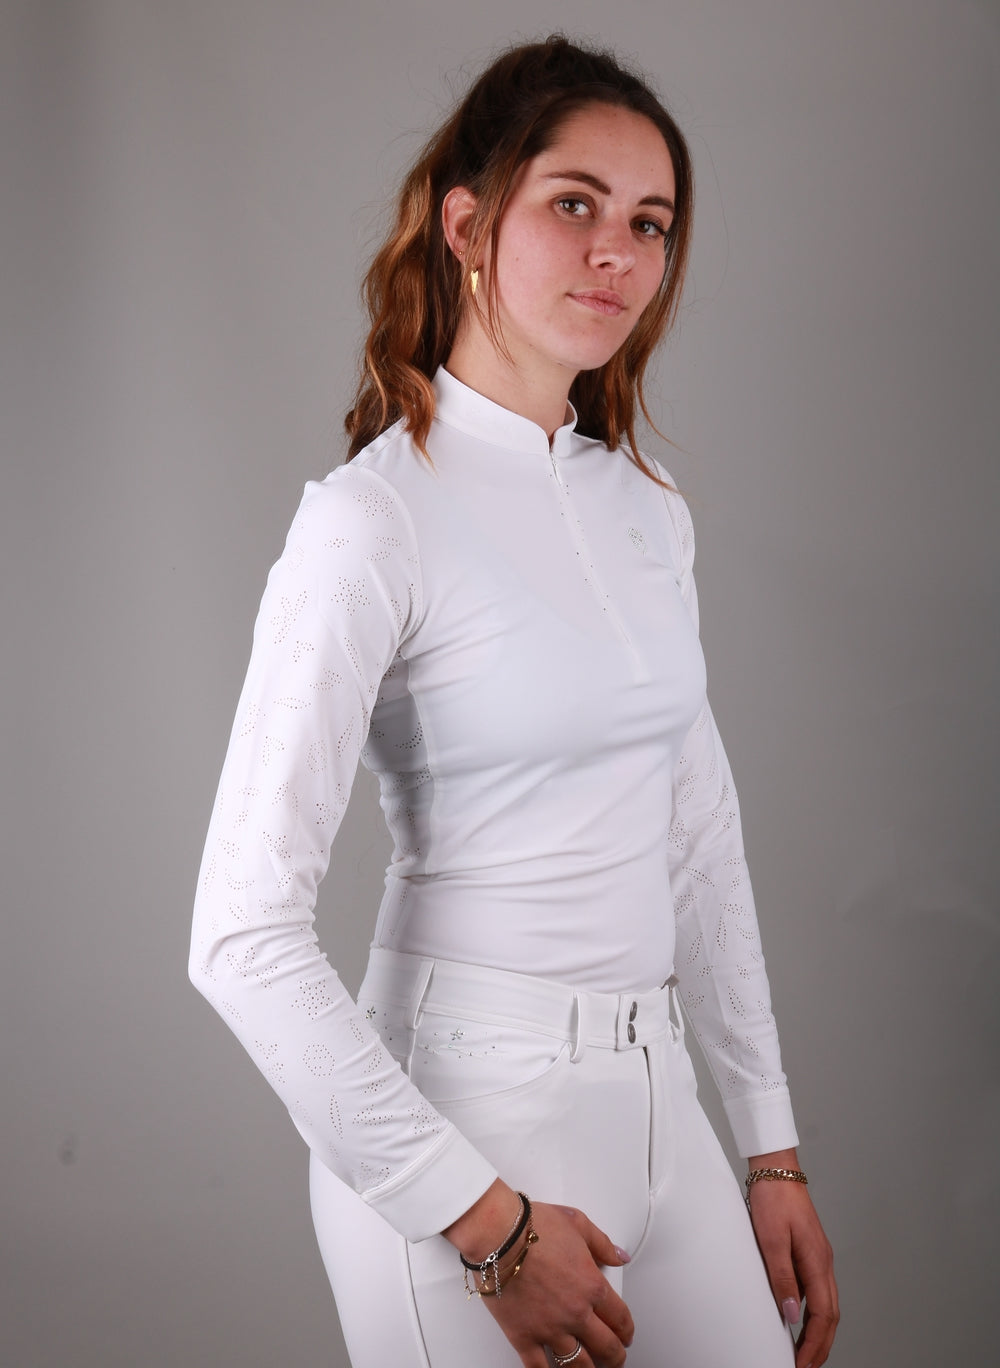 Samshield Long Sleeve Competition Shirt Ladies Louison white